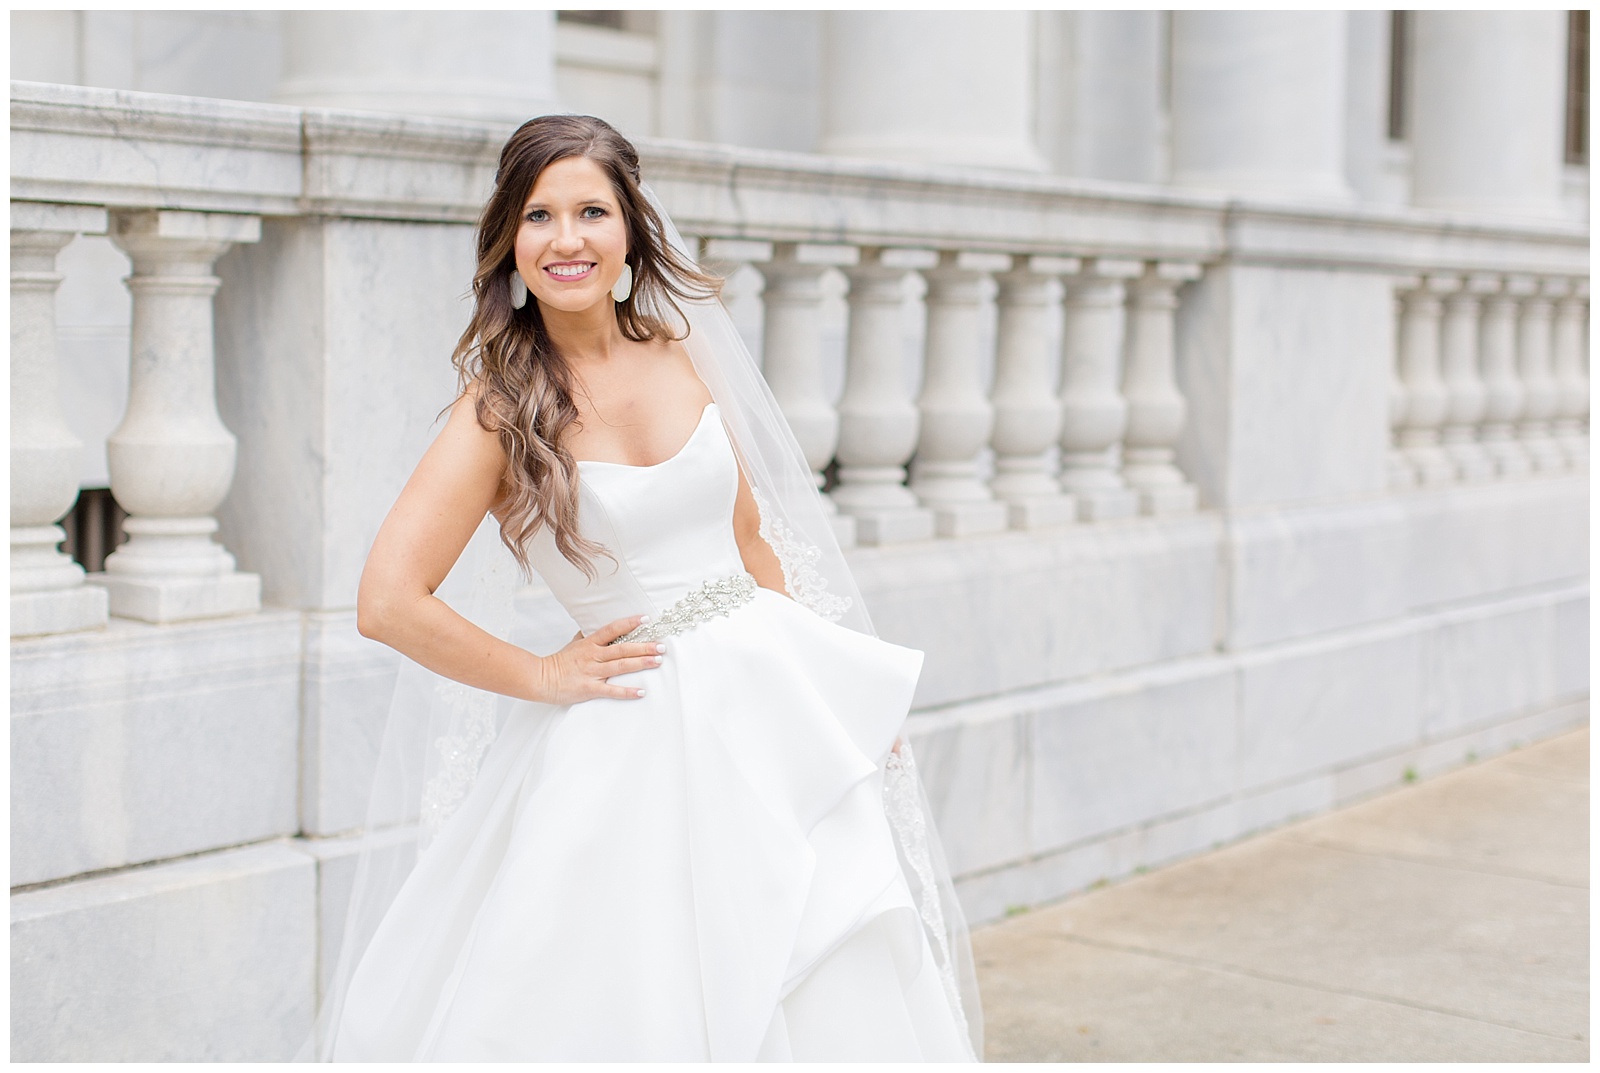 Ashley's Bridal Portraits | Katie & Alec Photography Best Birmingham, Alabama Wedding Photographers 2